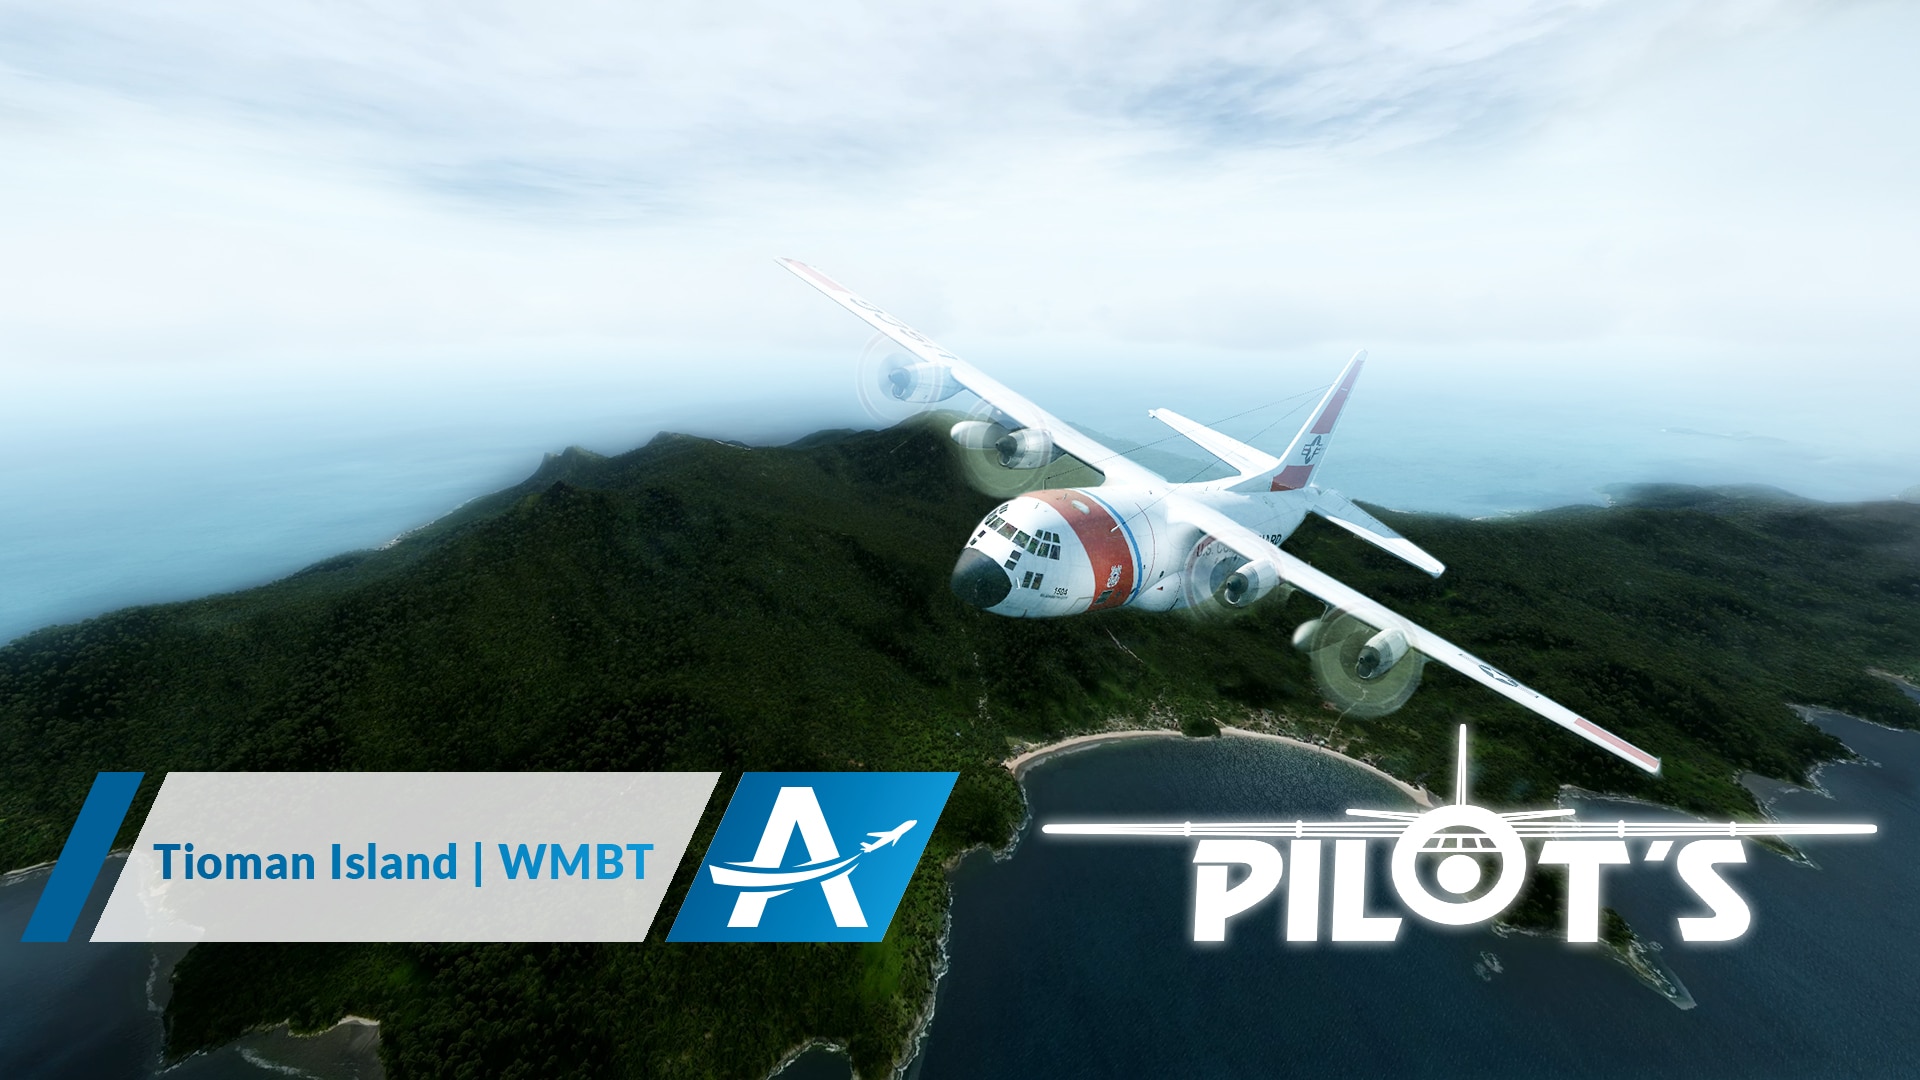 [TRAILER] PILOT’S – TIOMAN ISLAND | WMBT